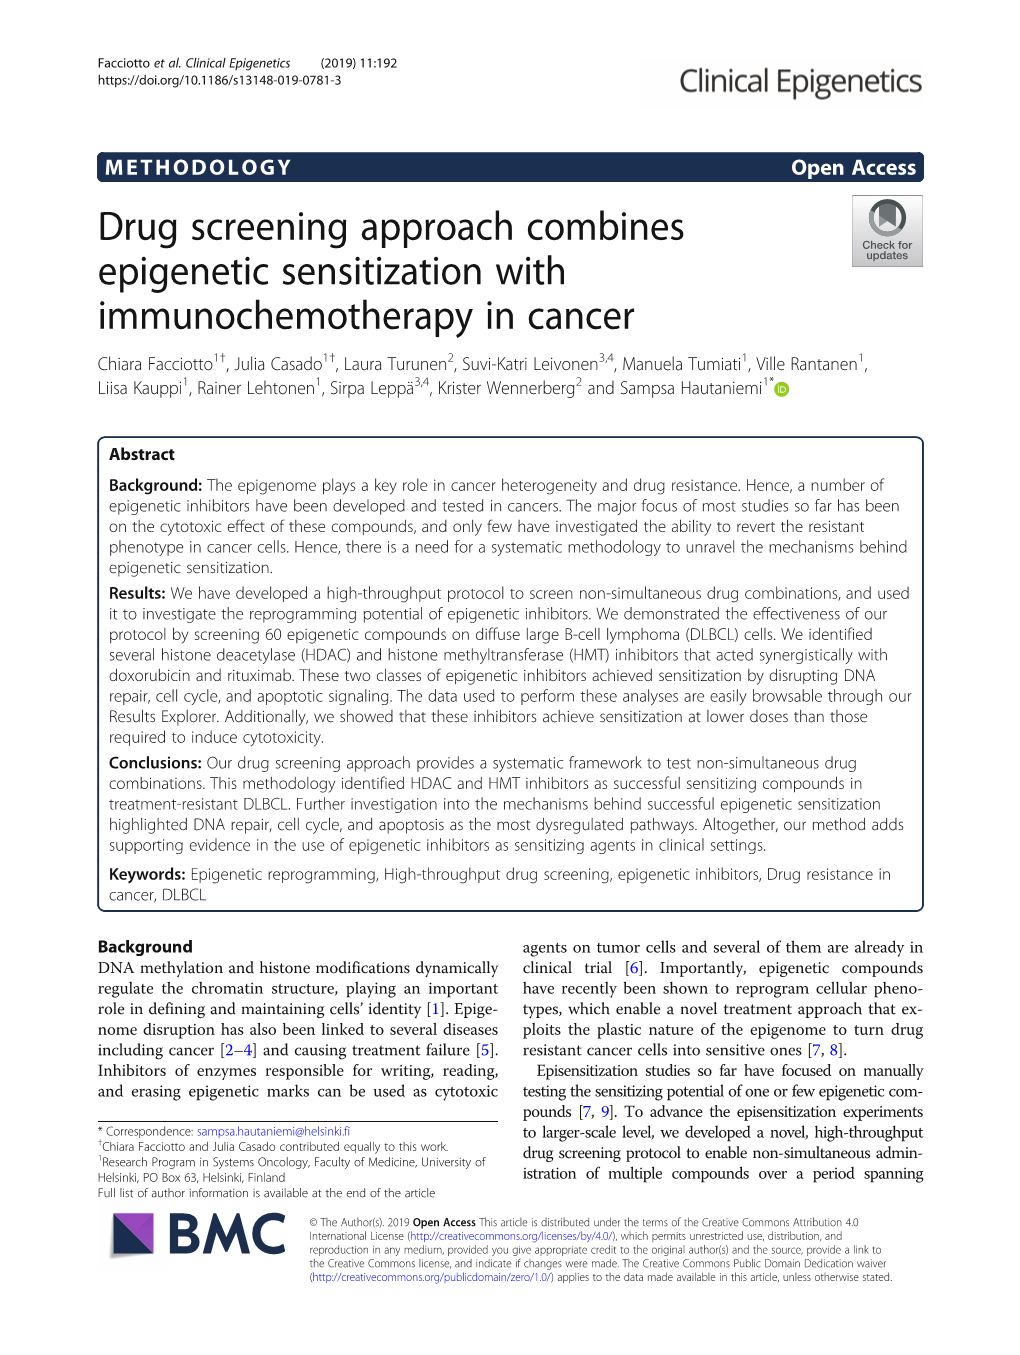 Drug Screening Approach Combines Epigenetic Sensitization With